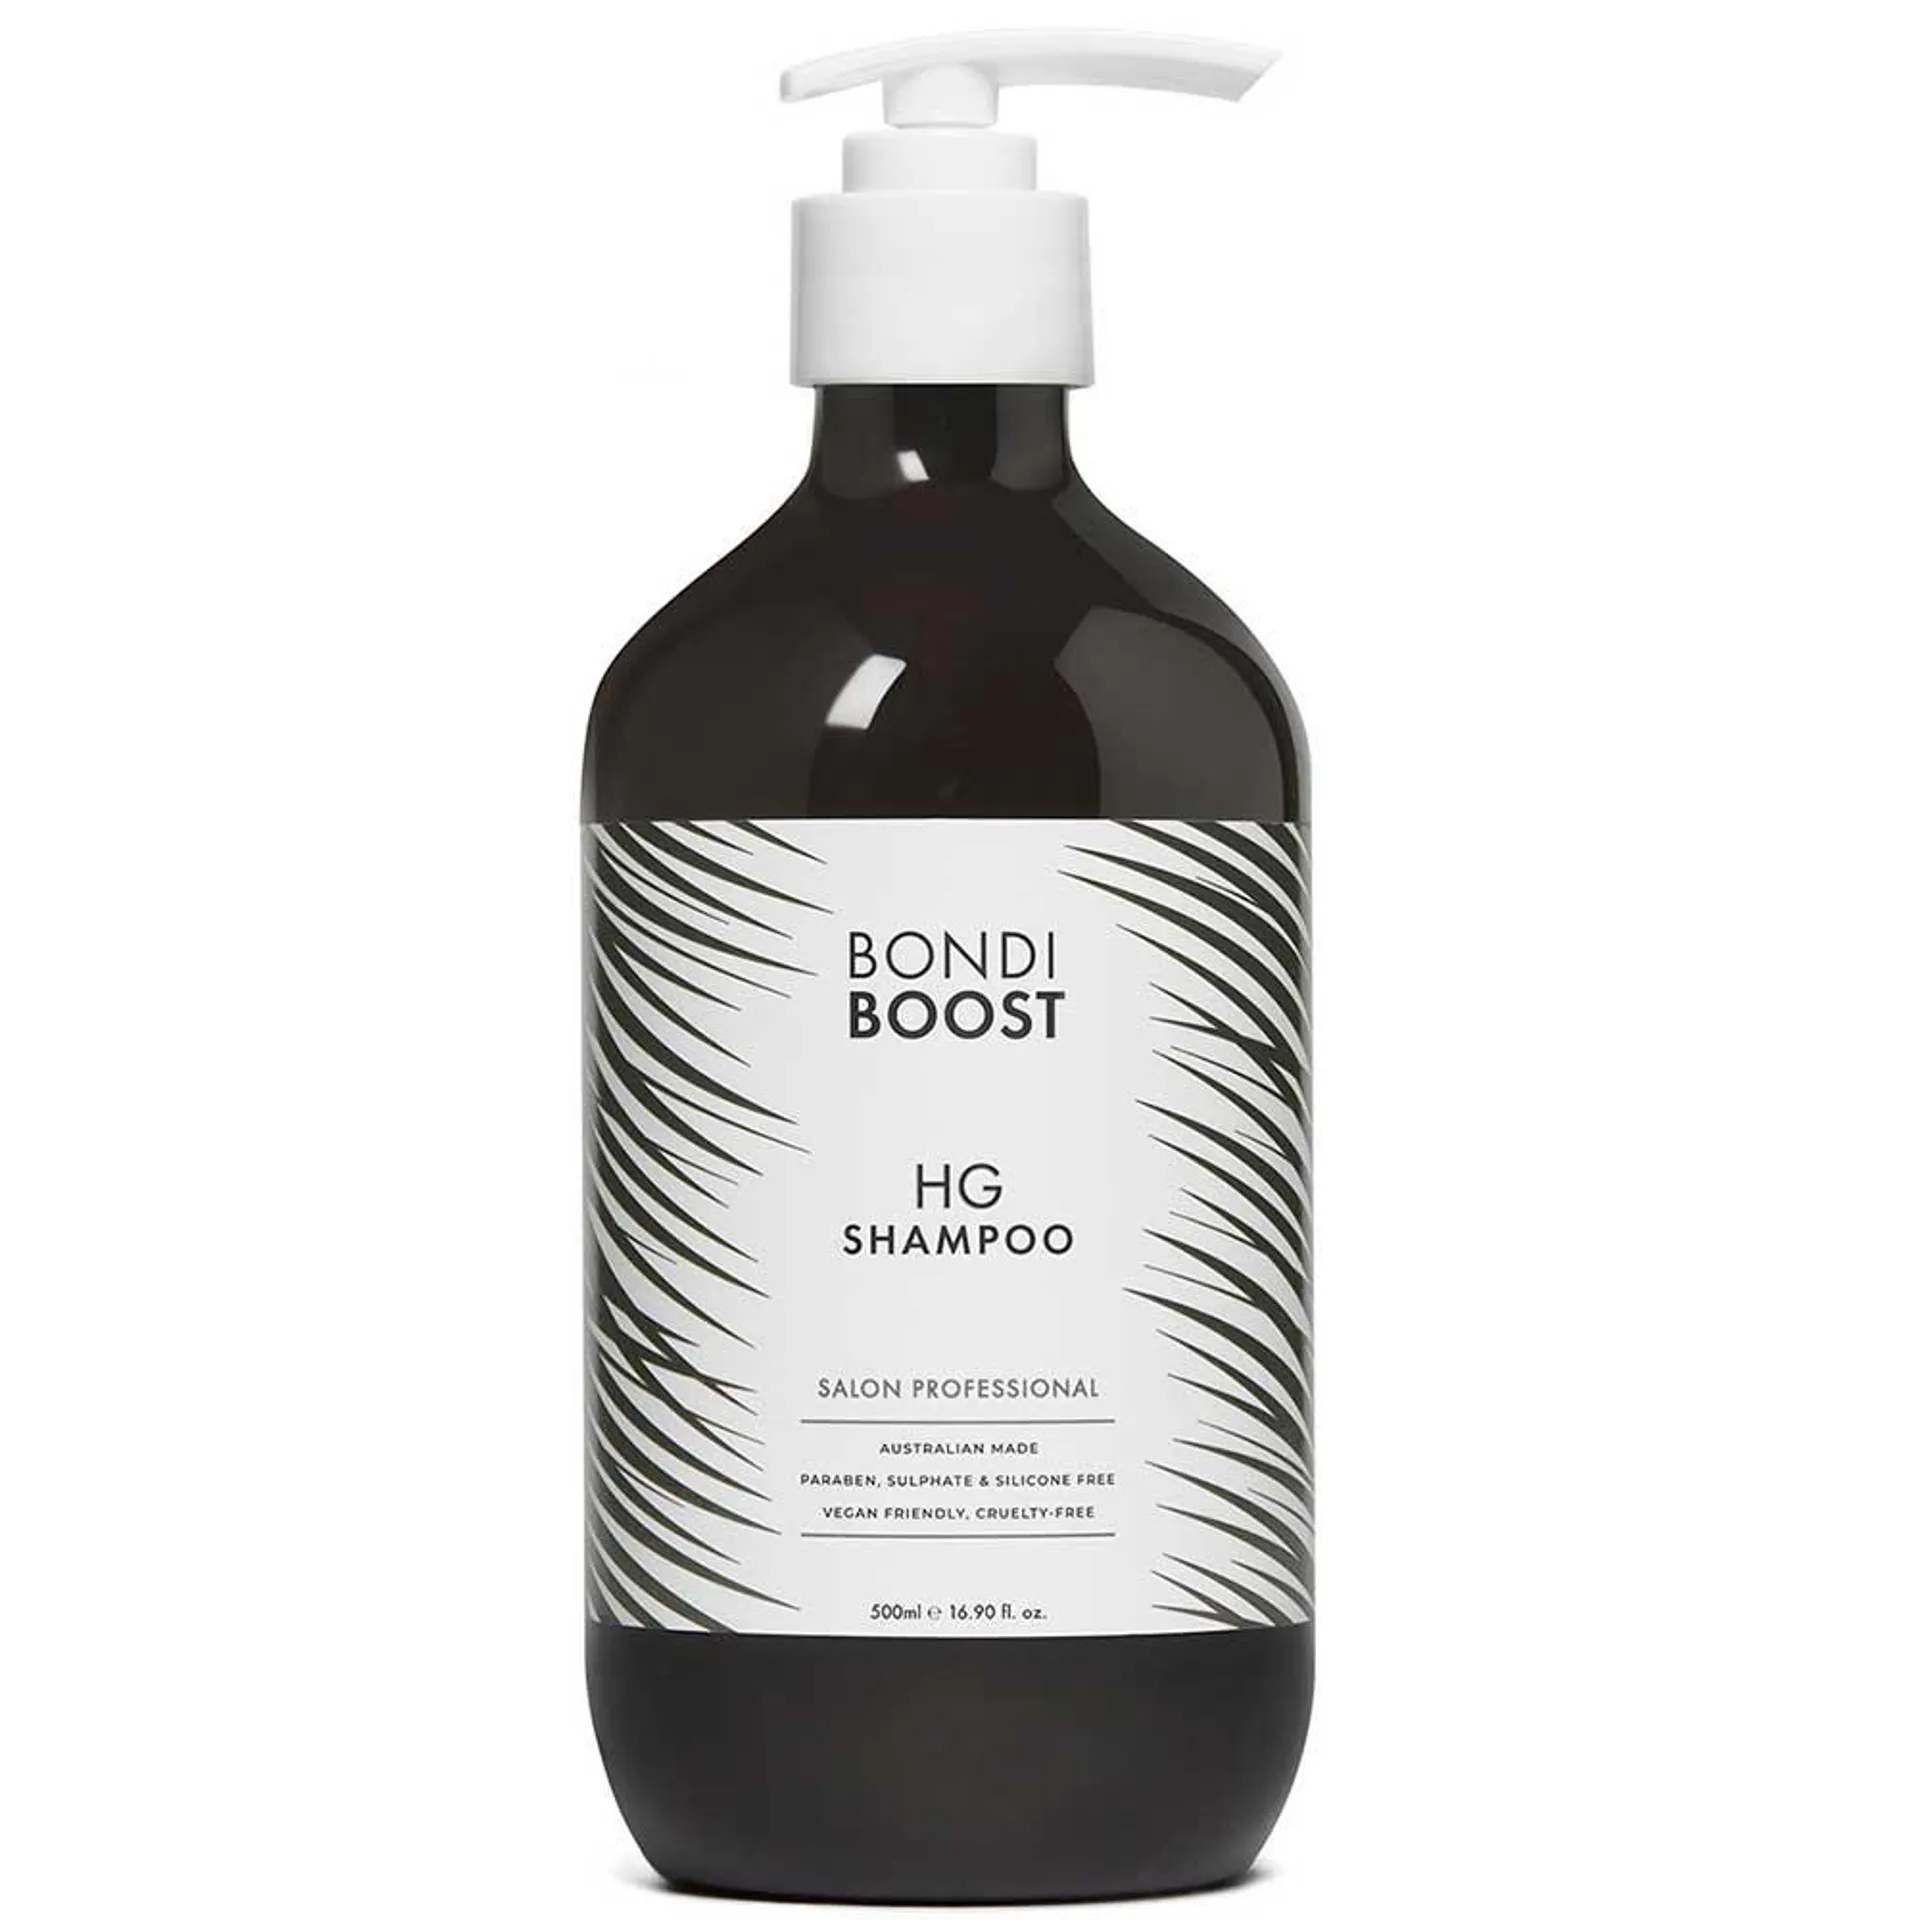 HG Shampoo 500ml